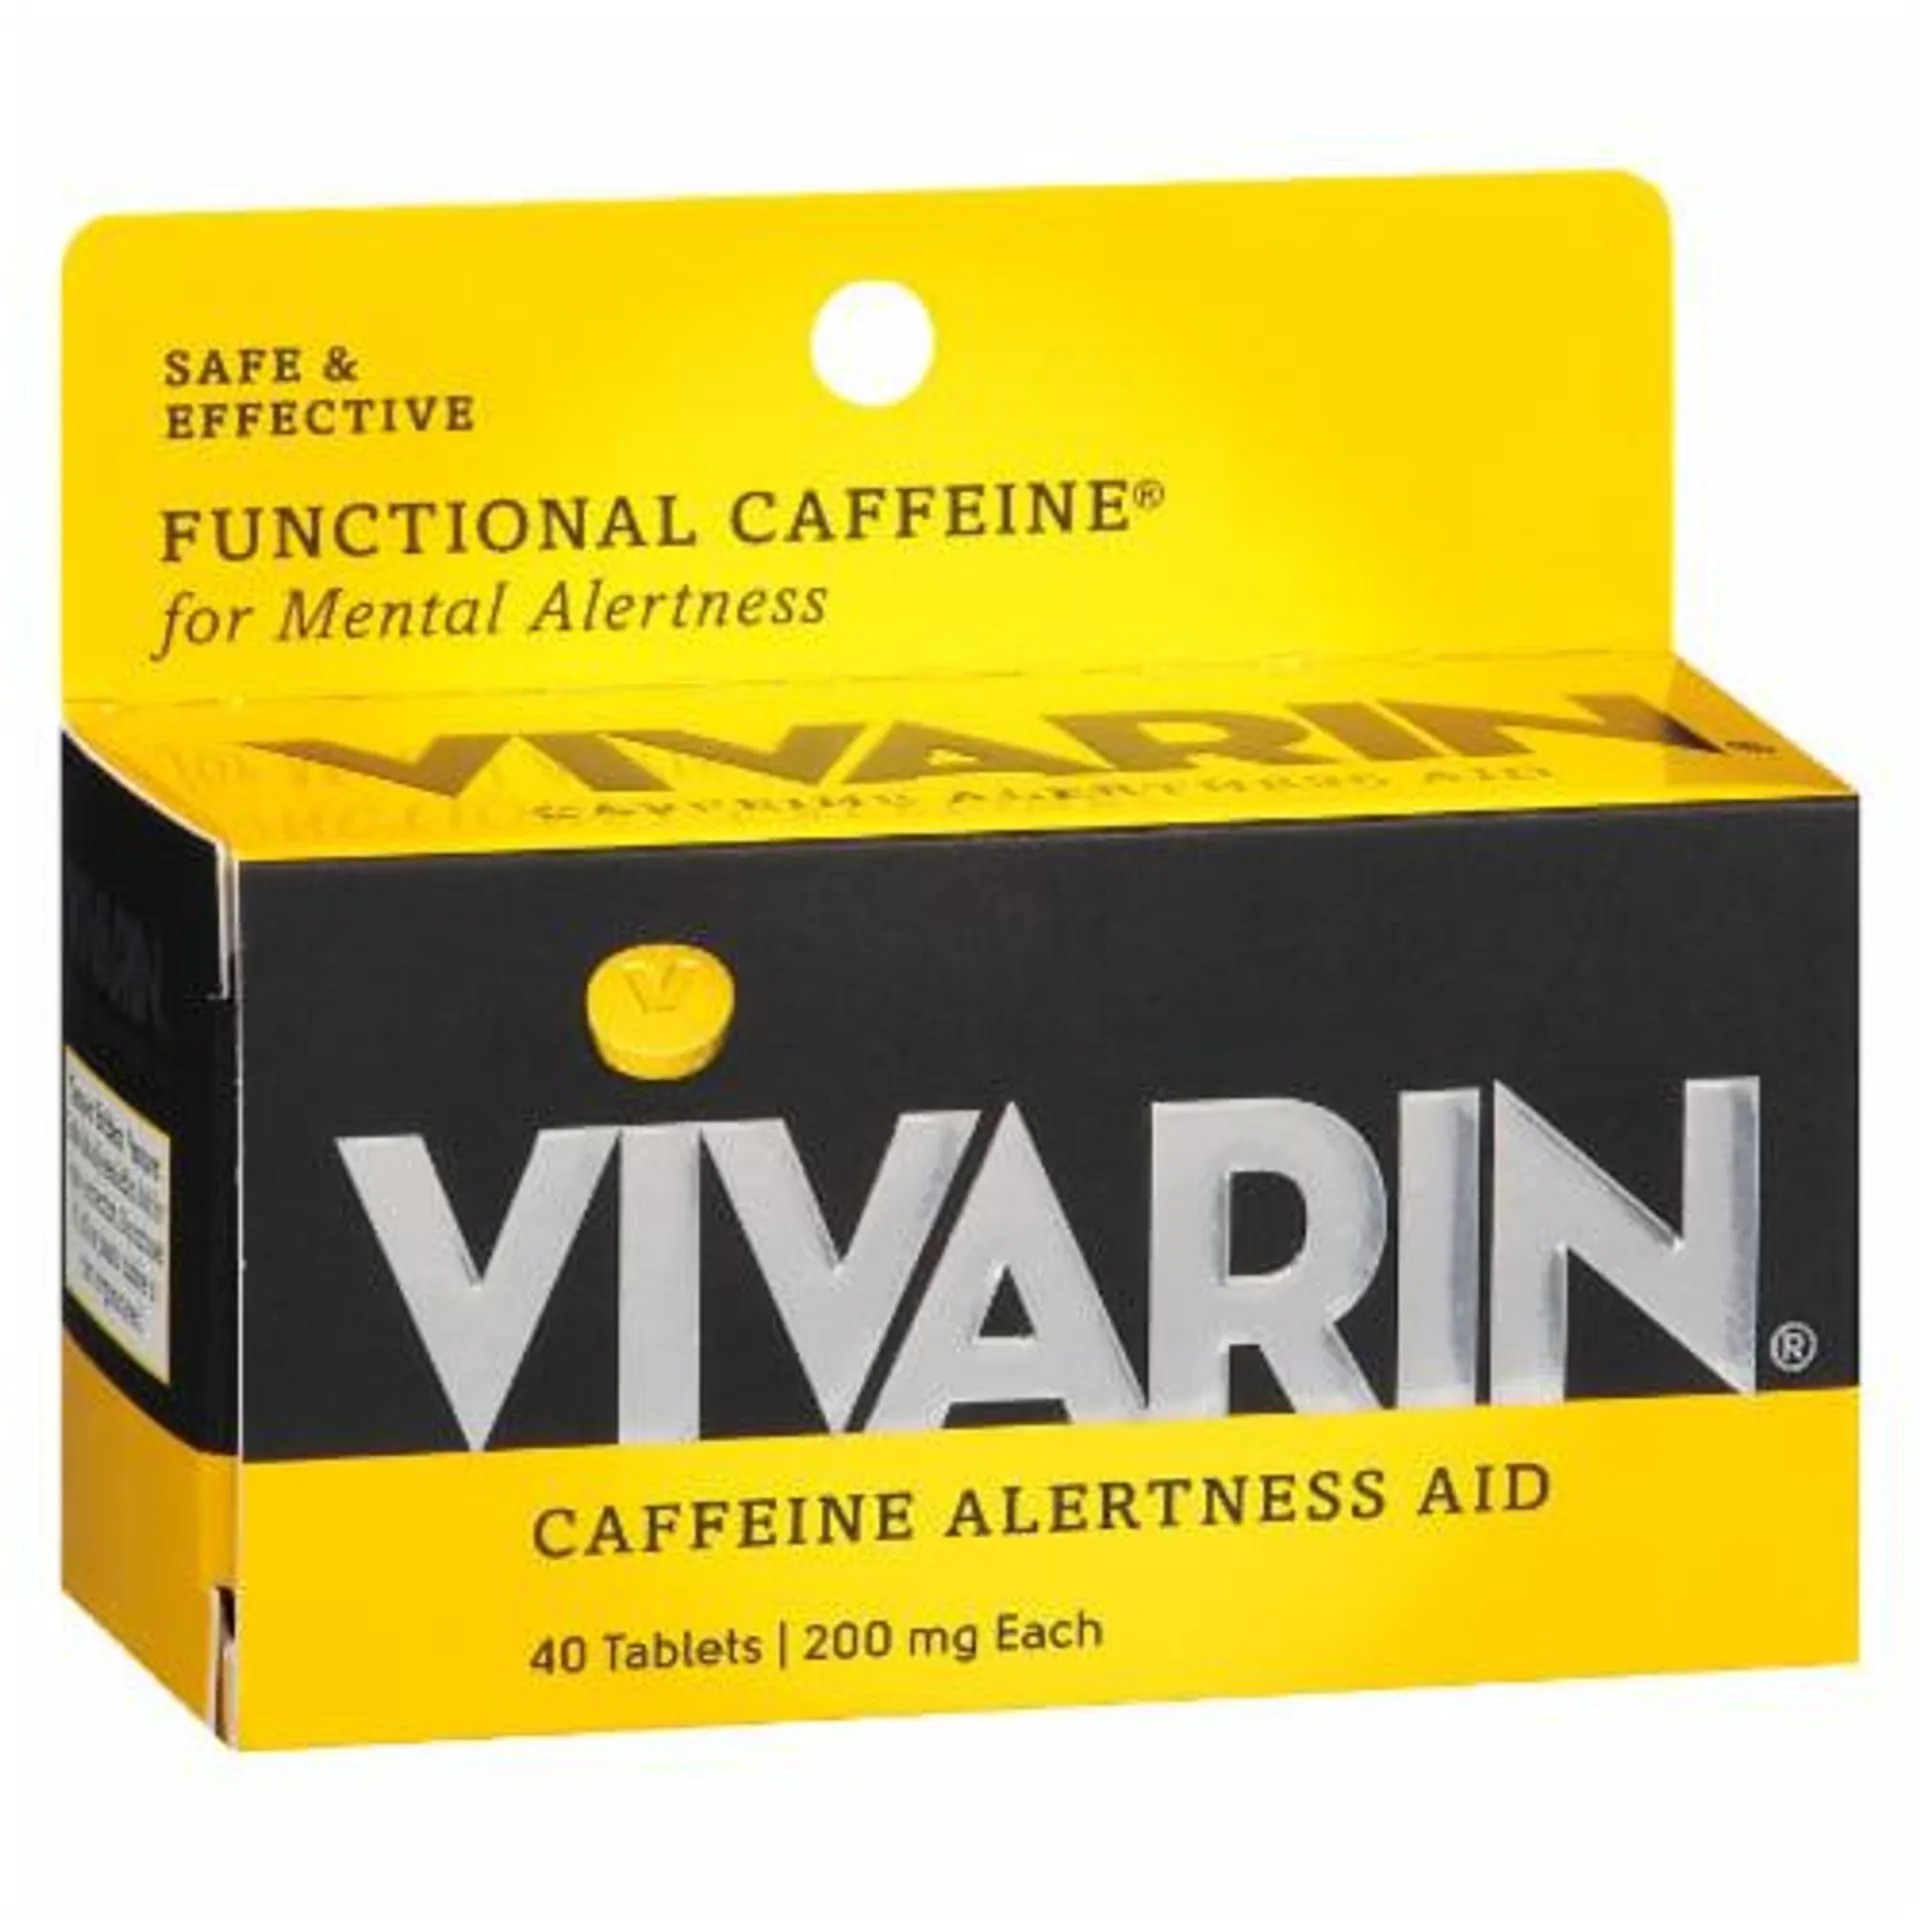 Vivarin 200mg Caffeine Tablets